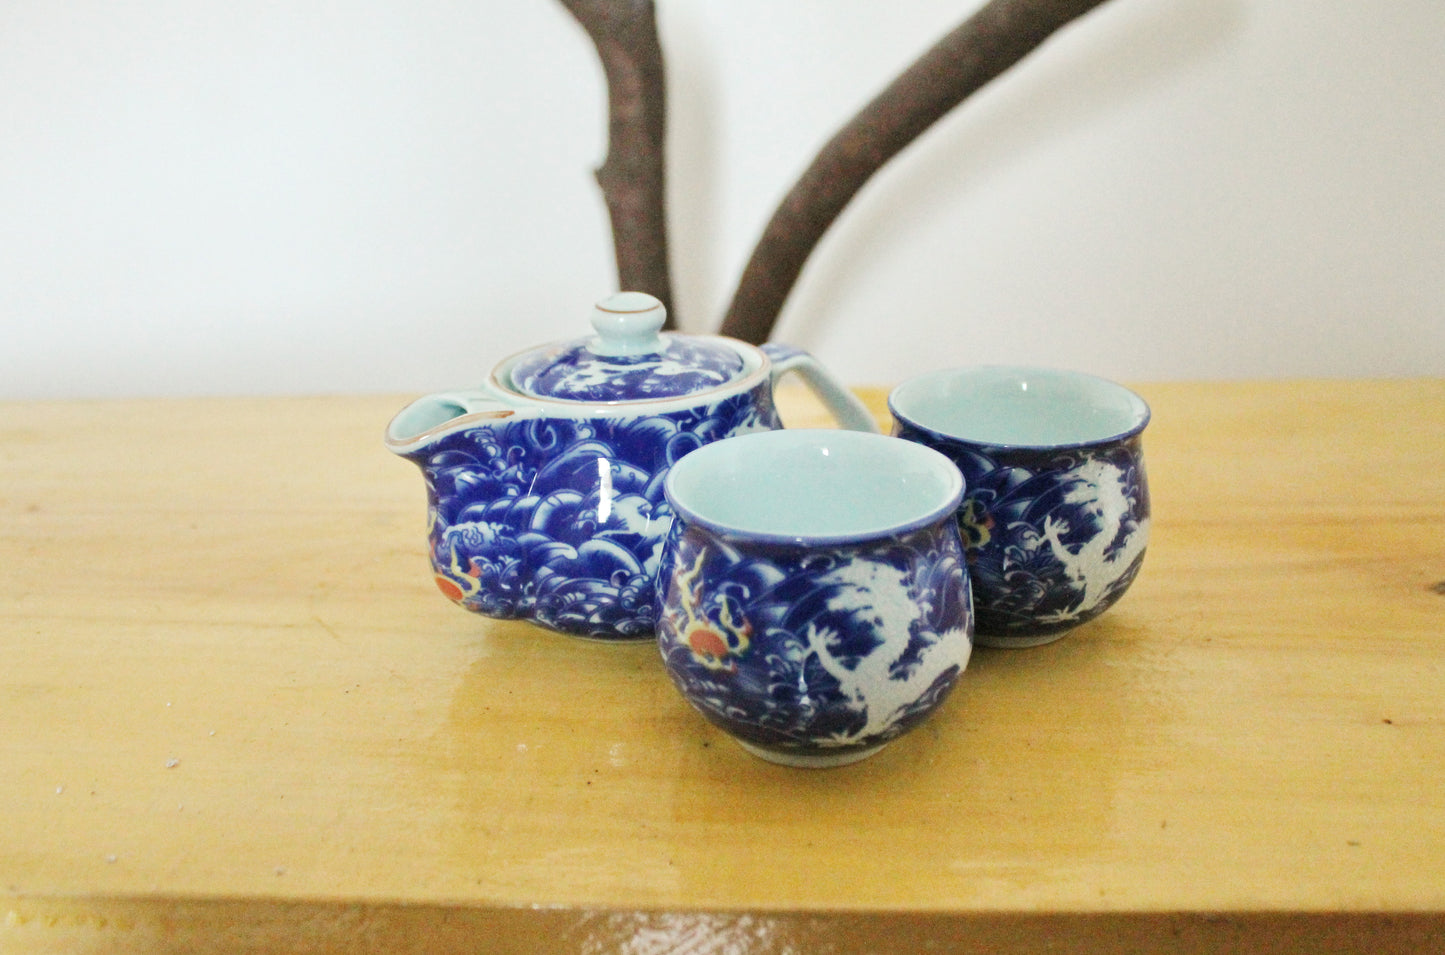 Porcelain beautiful China Set of Tea Pot and two tea glassess - Vintage porcelain - 1980-1990s